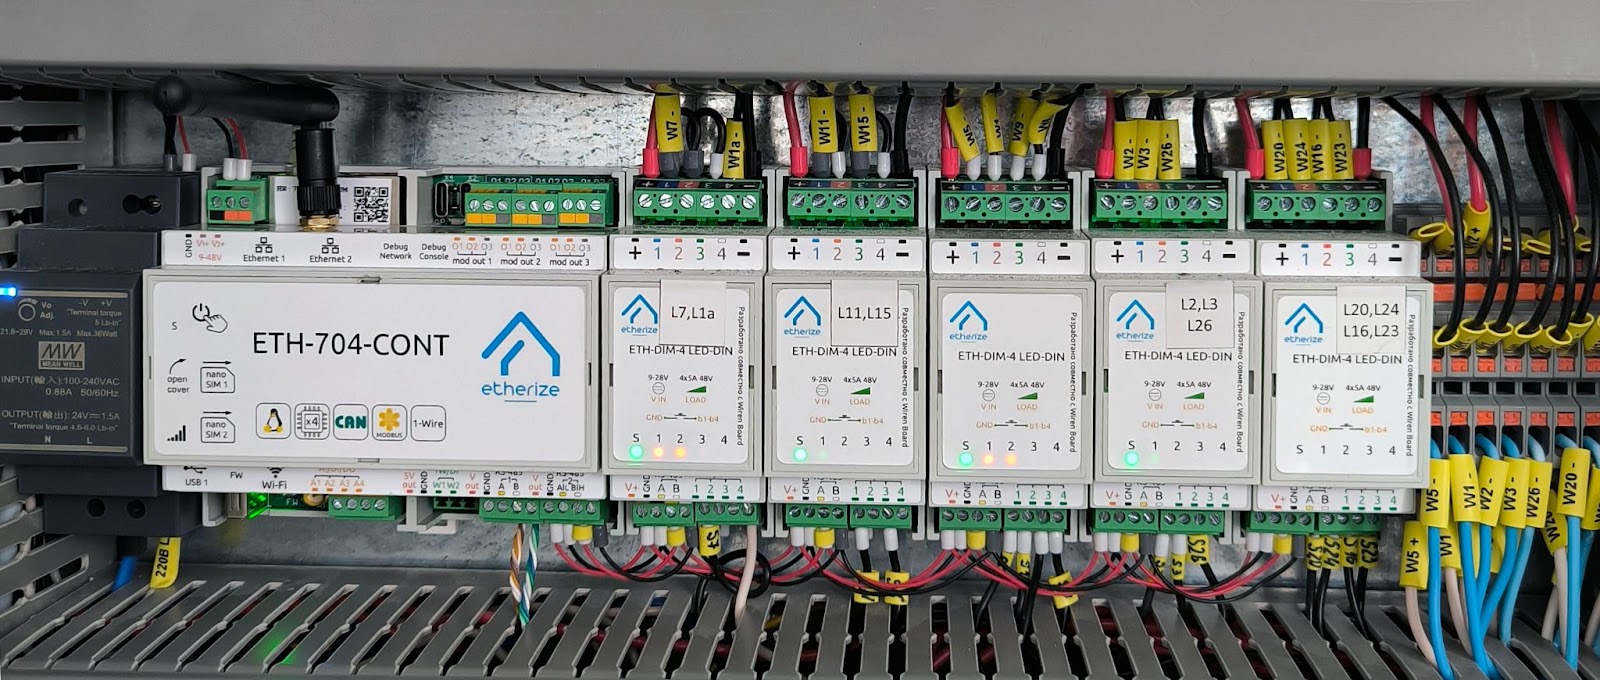 Контроллер Wiren Board и модули диммирования, брендированные интегратором Etherize  